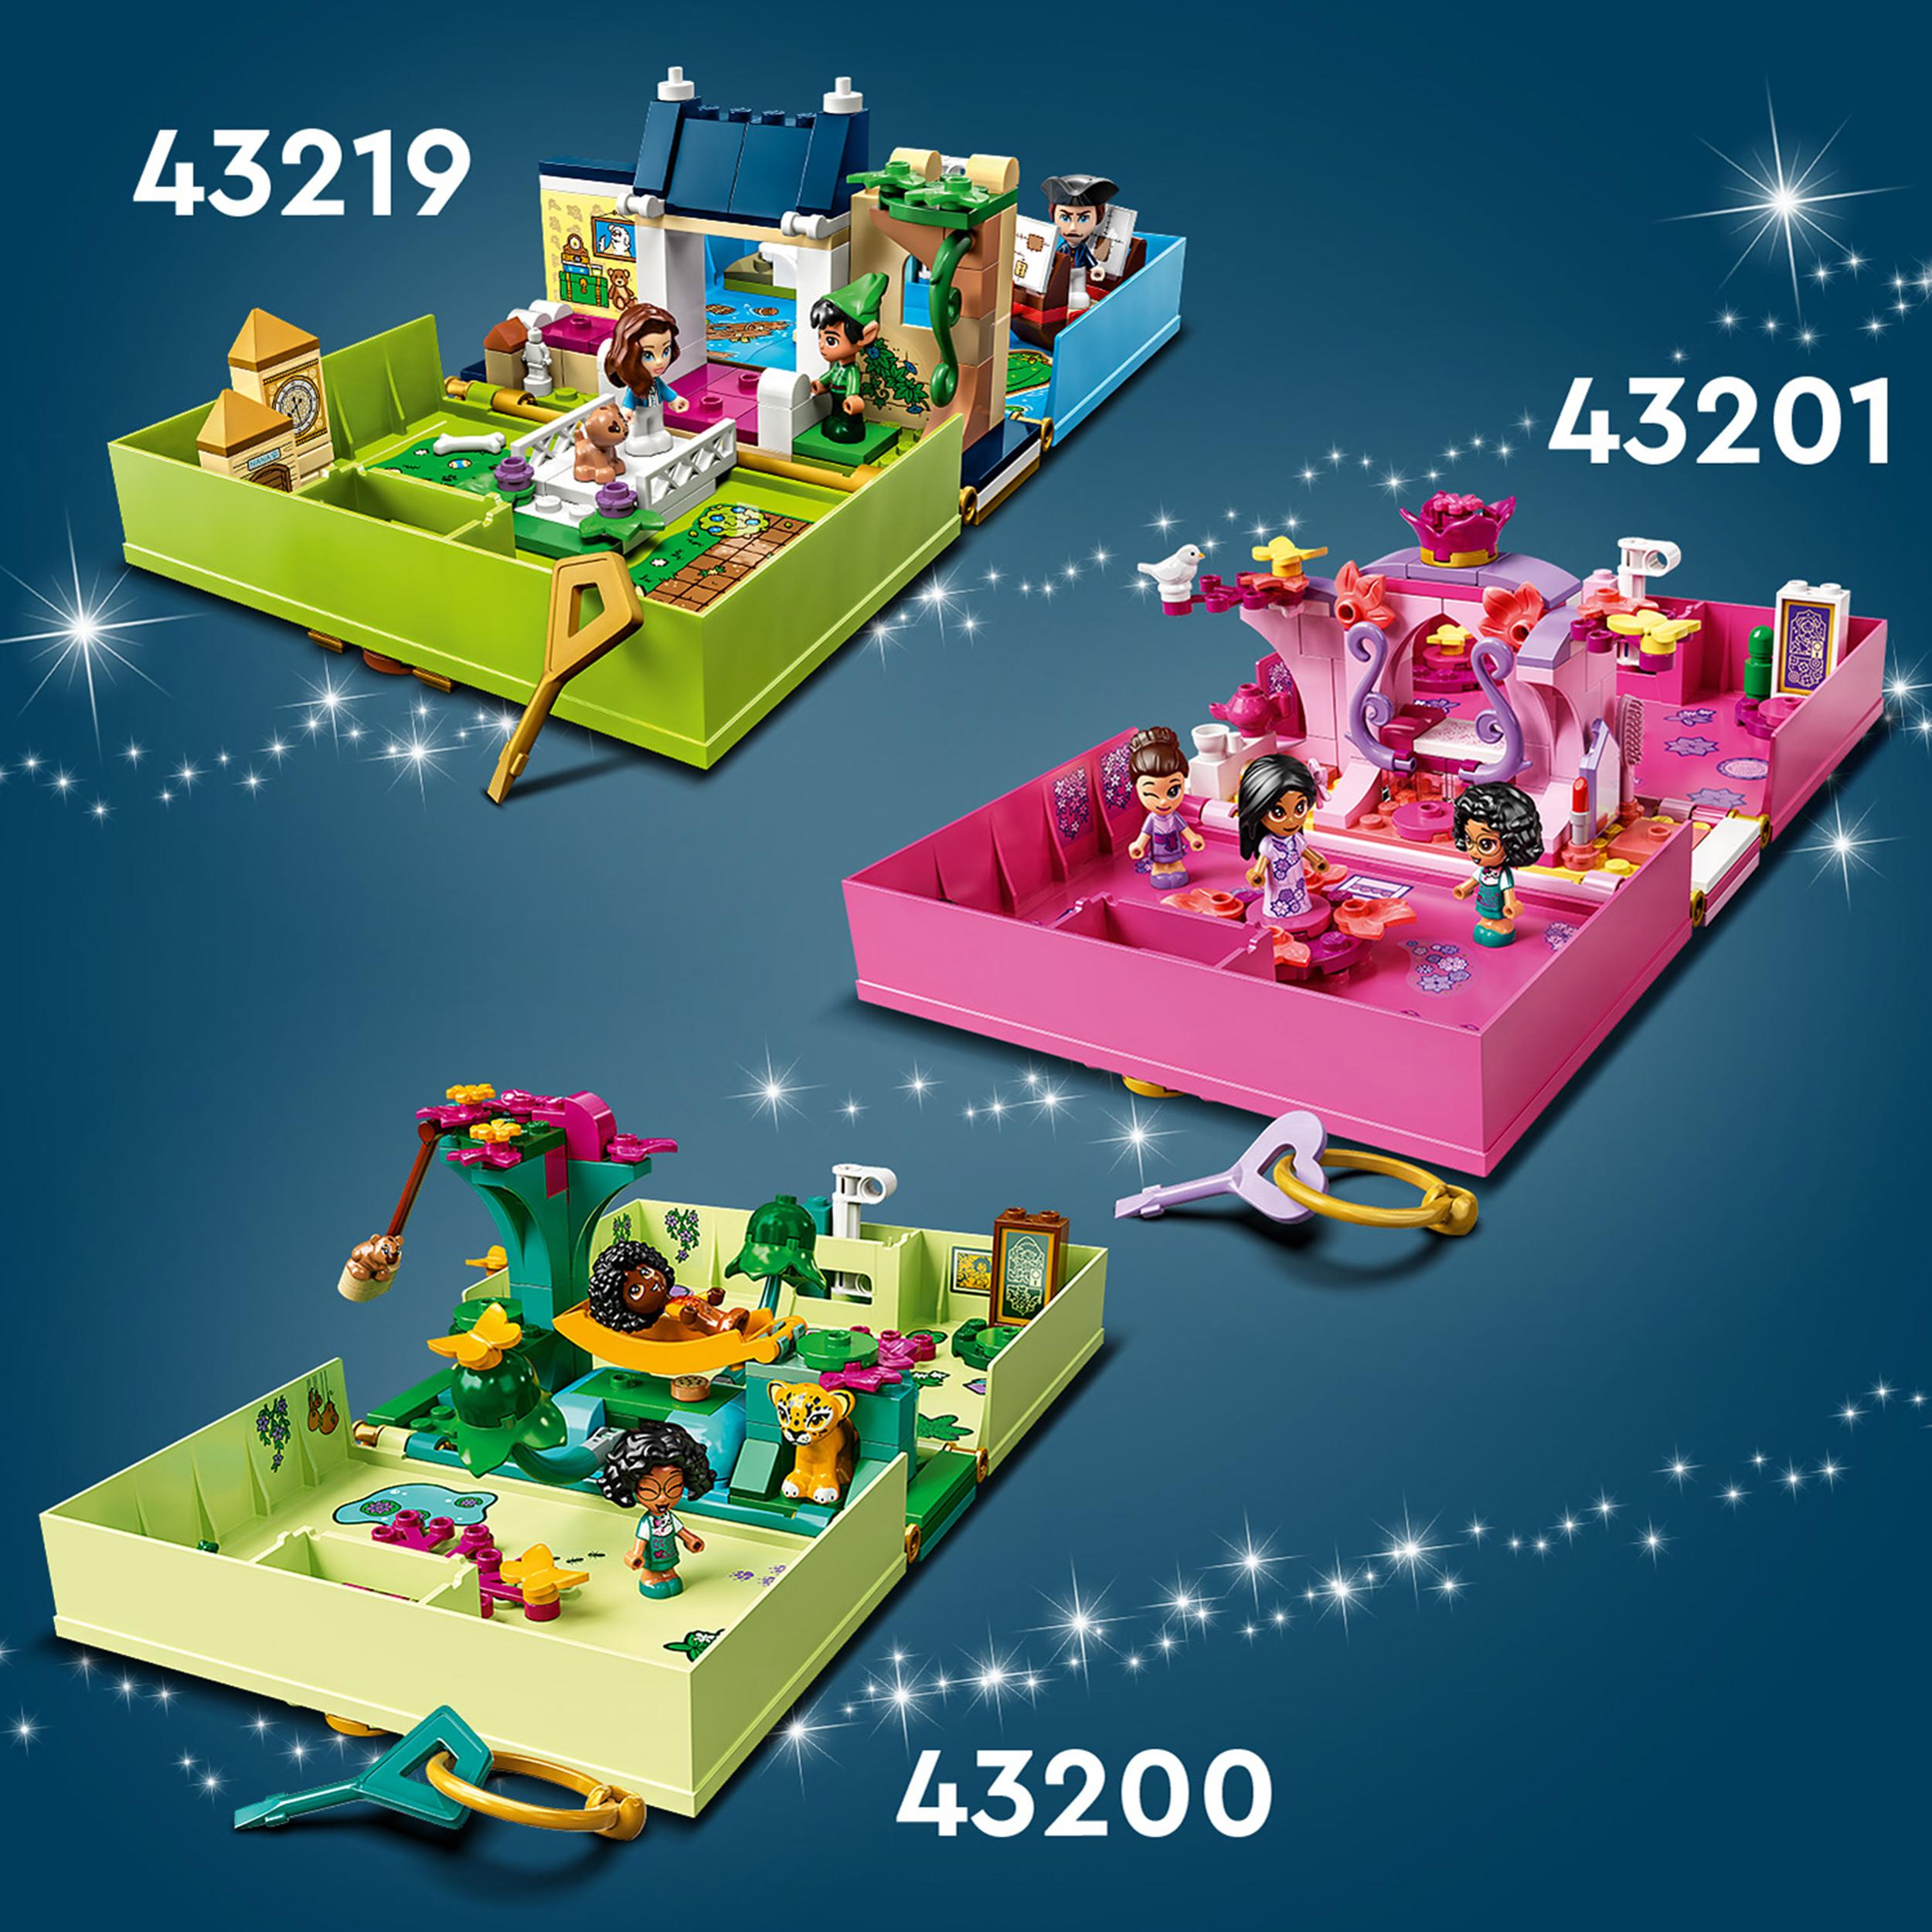 LEGO Disney & Märchenbuch-Abenteuer Classic Pan Wendy Peter Mehrfarbig – Bausatz, 43220